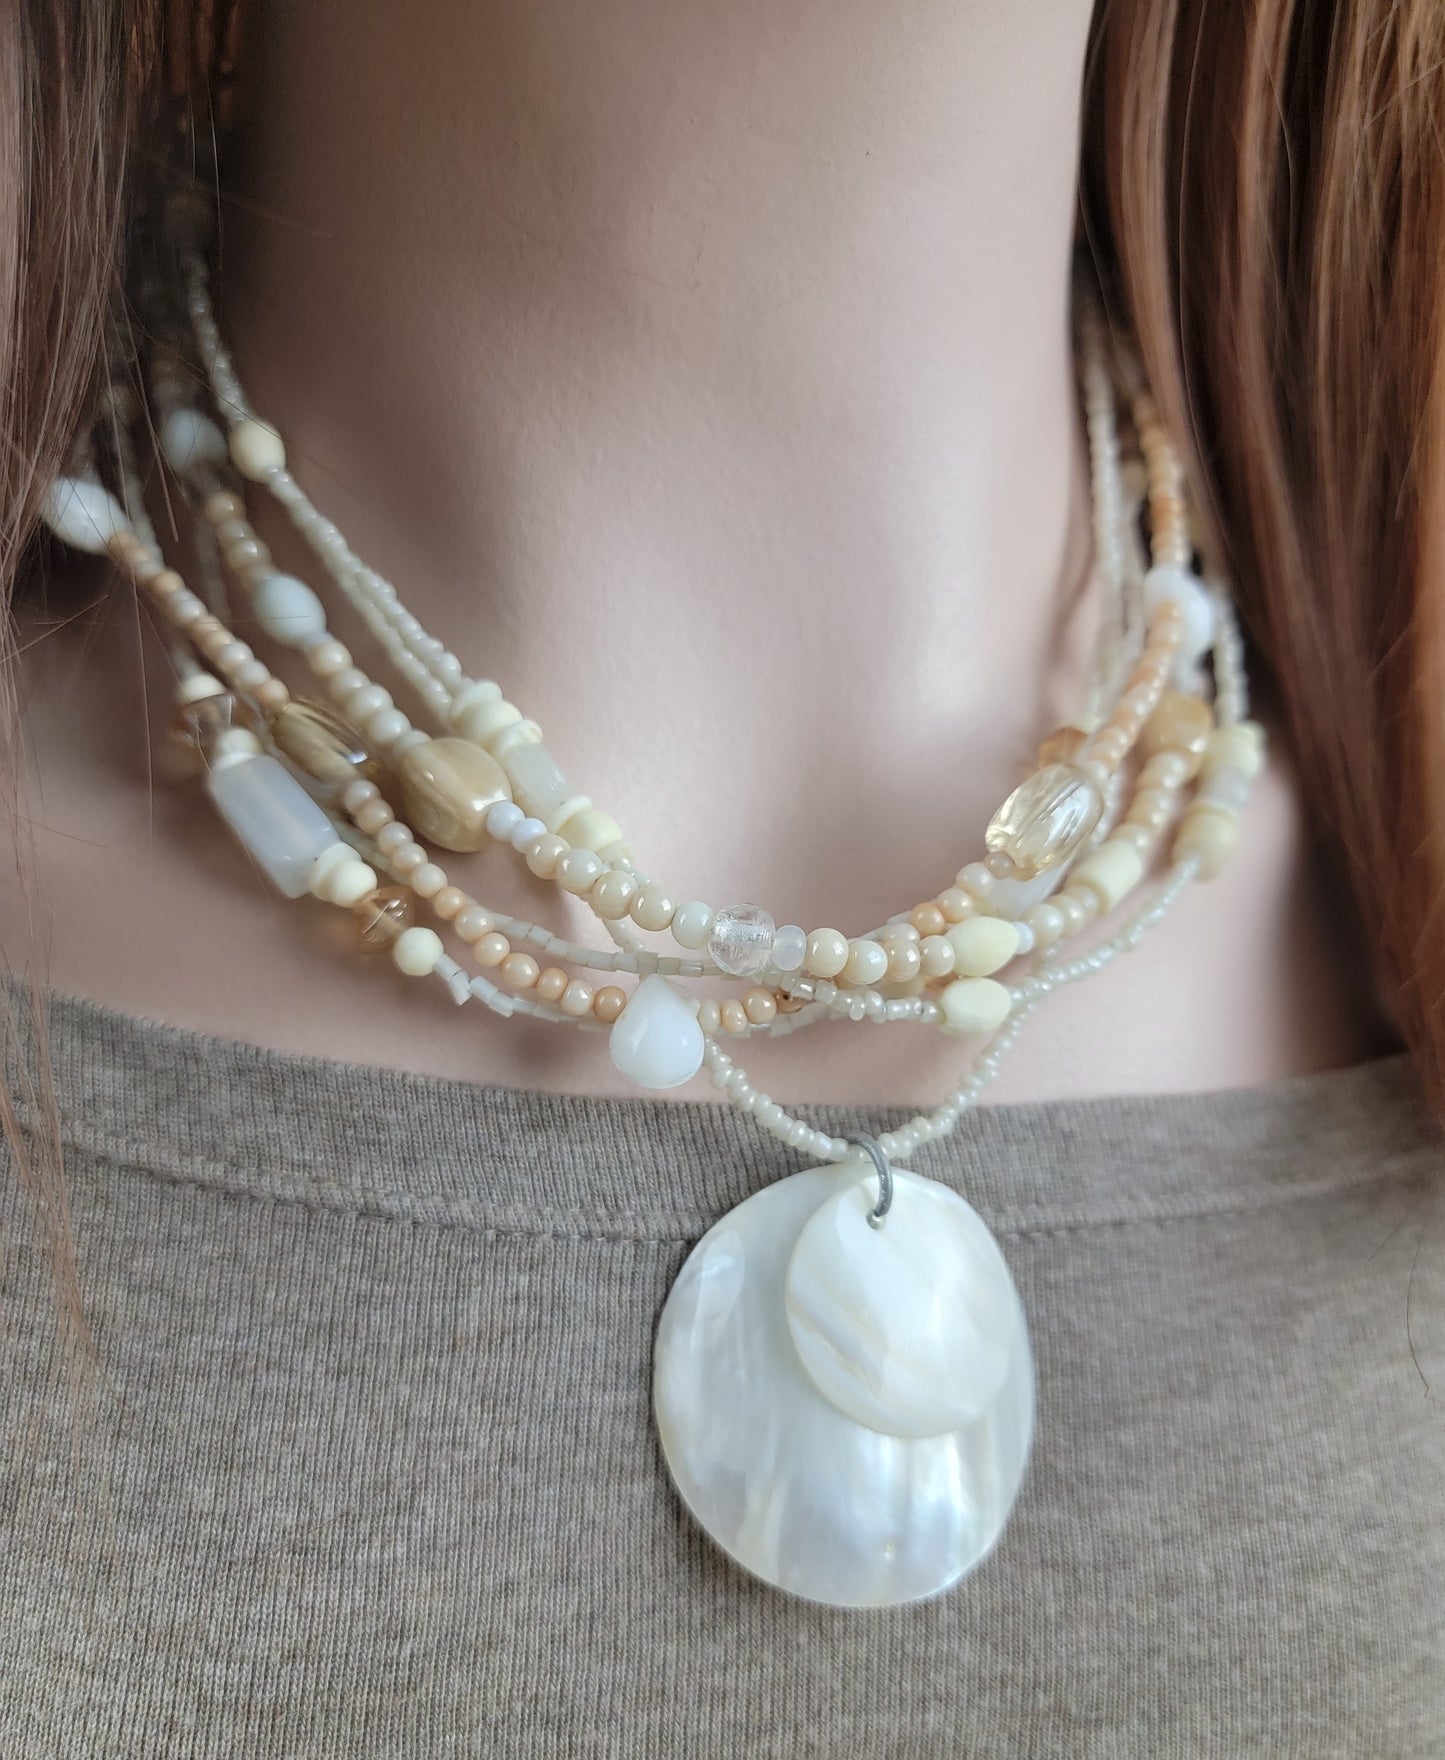 Multi Strand White Clear Cream Shell Glass Disc Bead Collar Pendant Necklace 18"